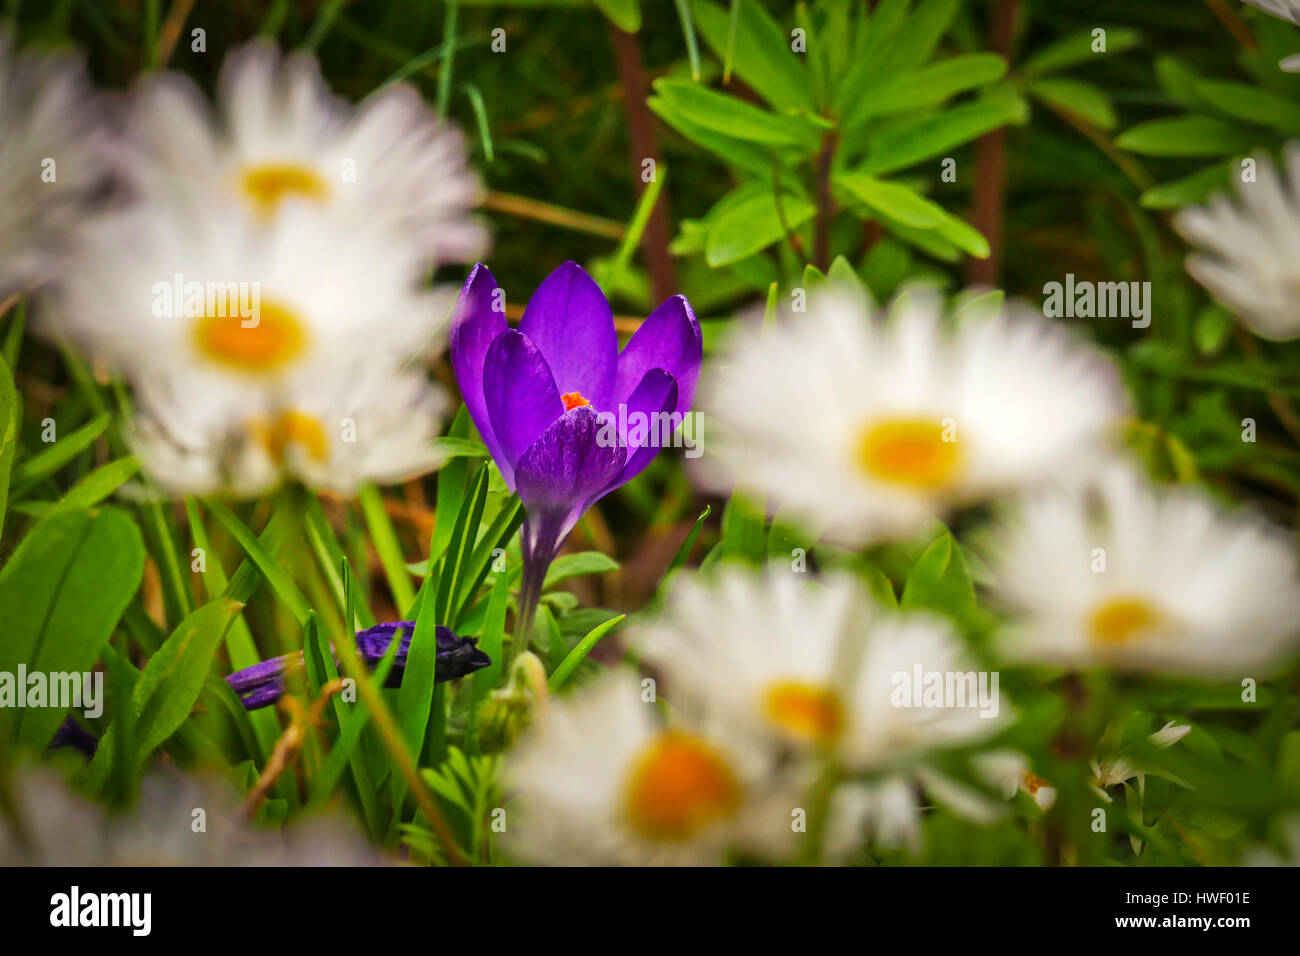 Mauve Crocuses hidden amongst daisies growing in London Stock Photo